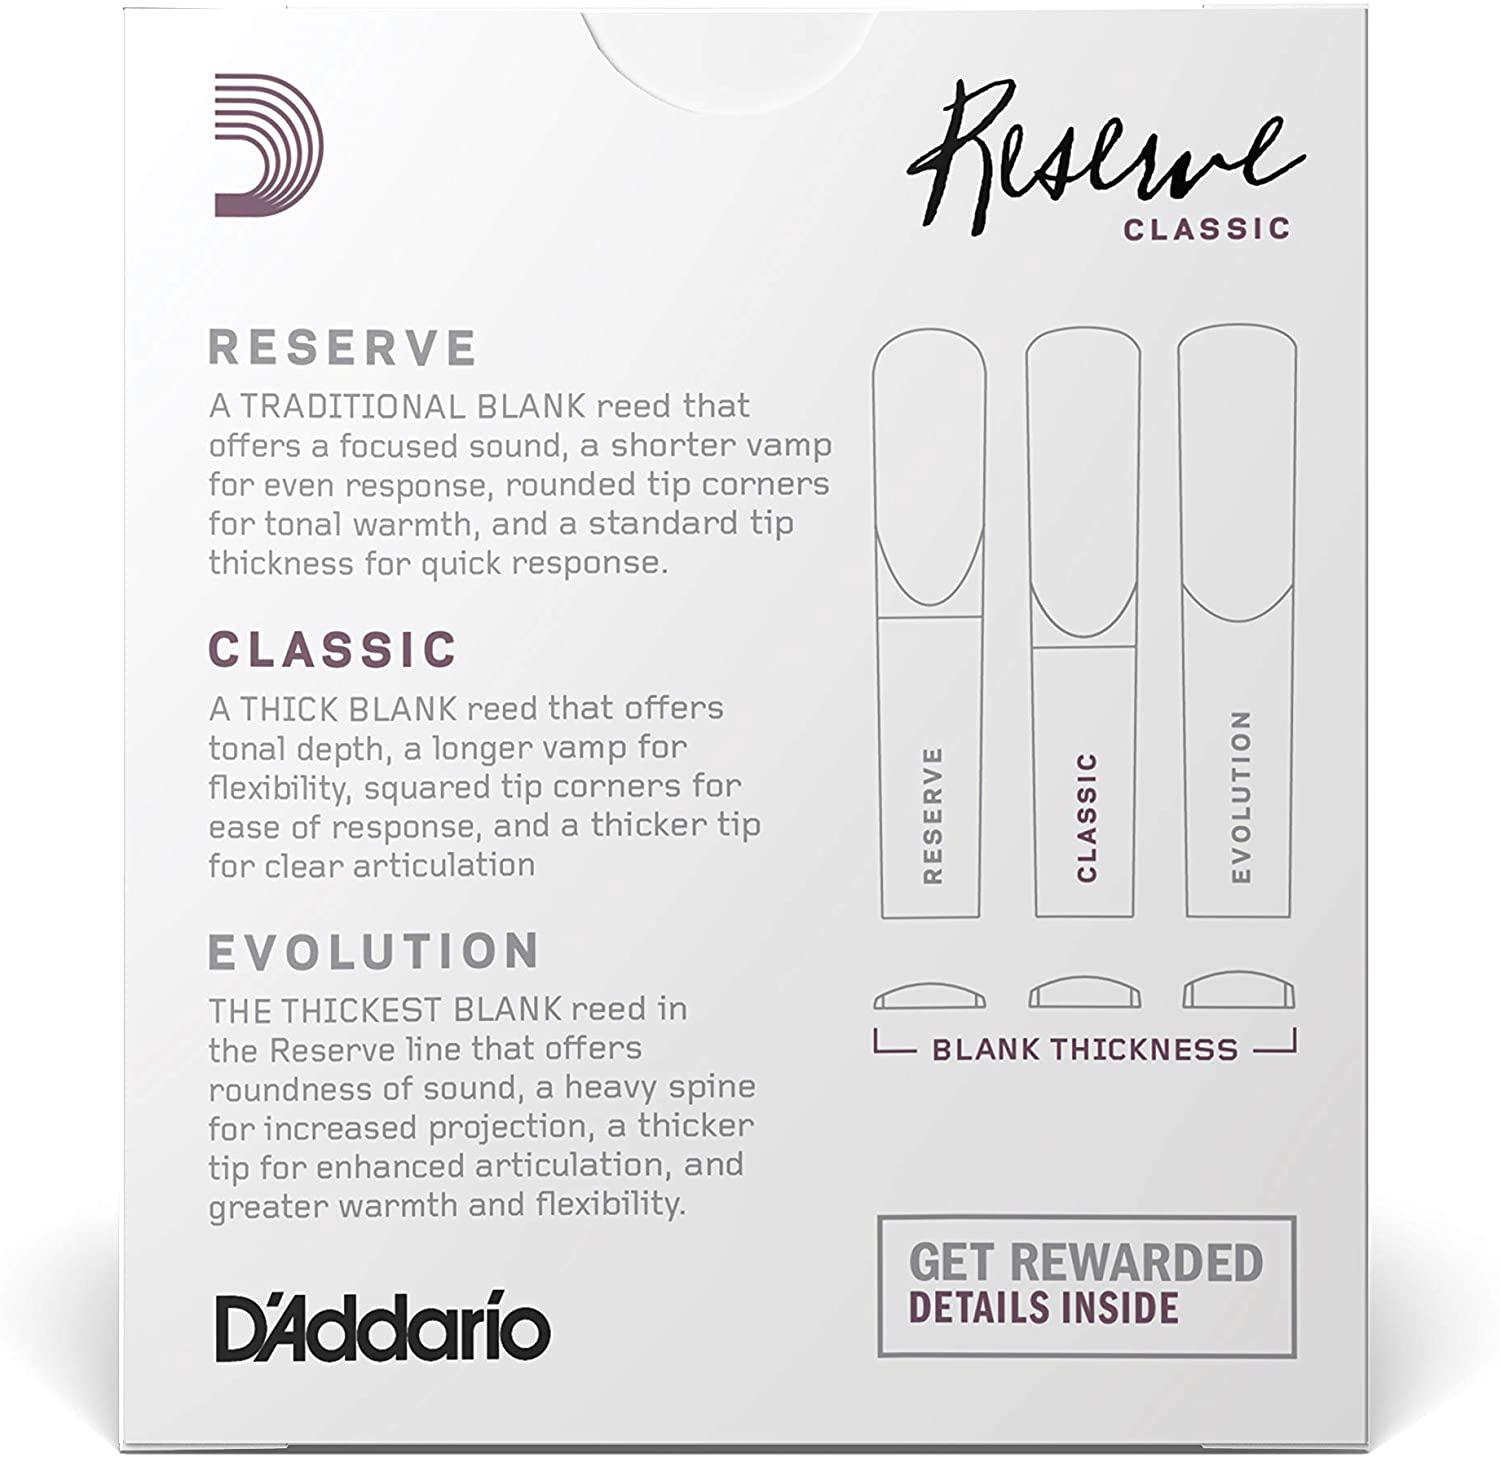 D'Addario - 10 Cañas Reserve Classic para Clarinete Sib, Medida: Varias Mod.DCT10___59